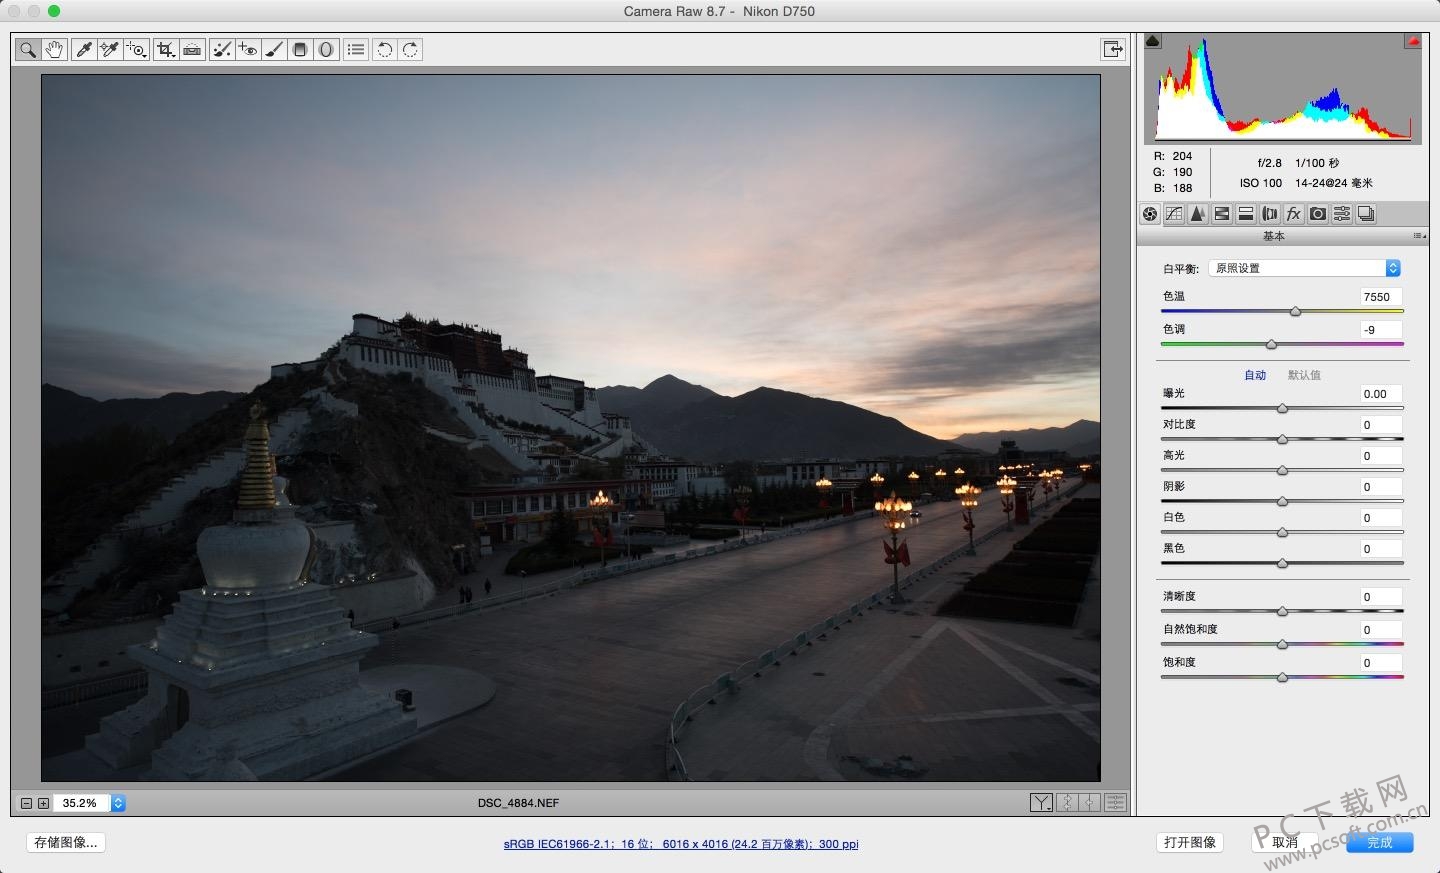 Adobe Camera Raw 16.0 download the last version for mac